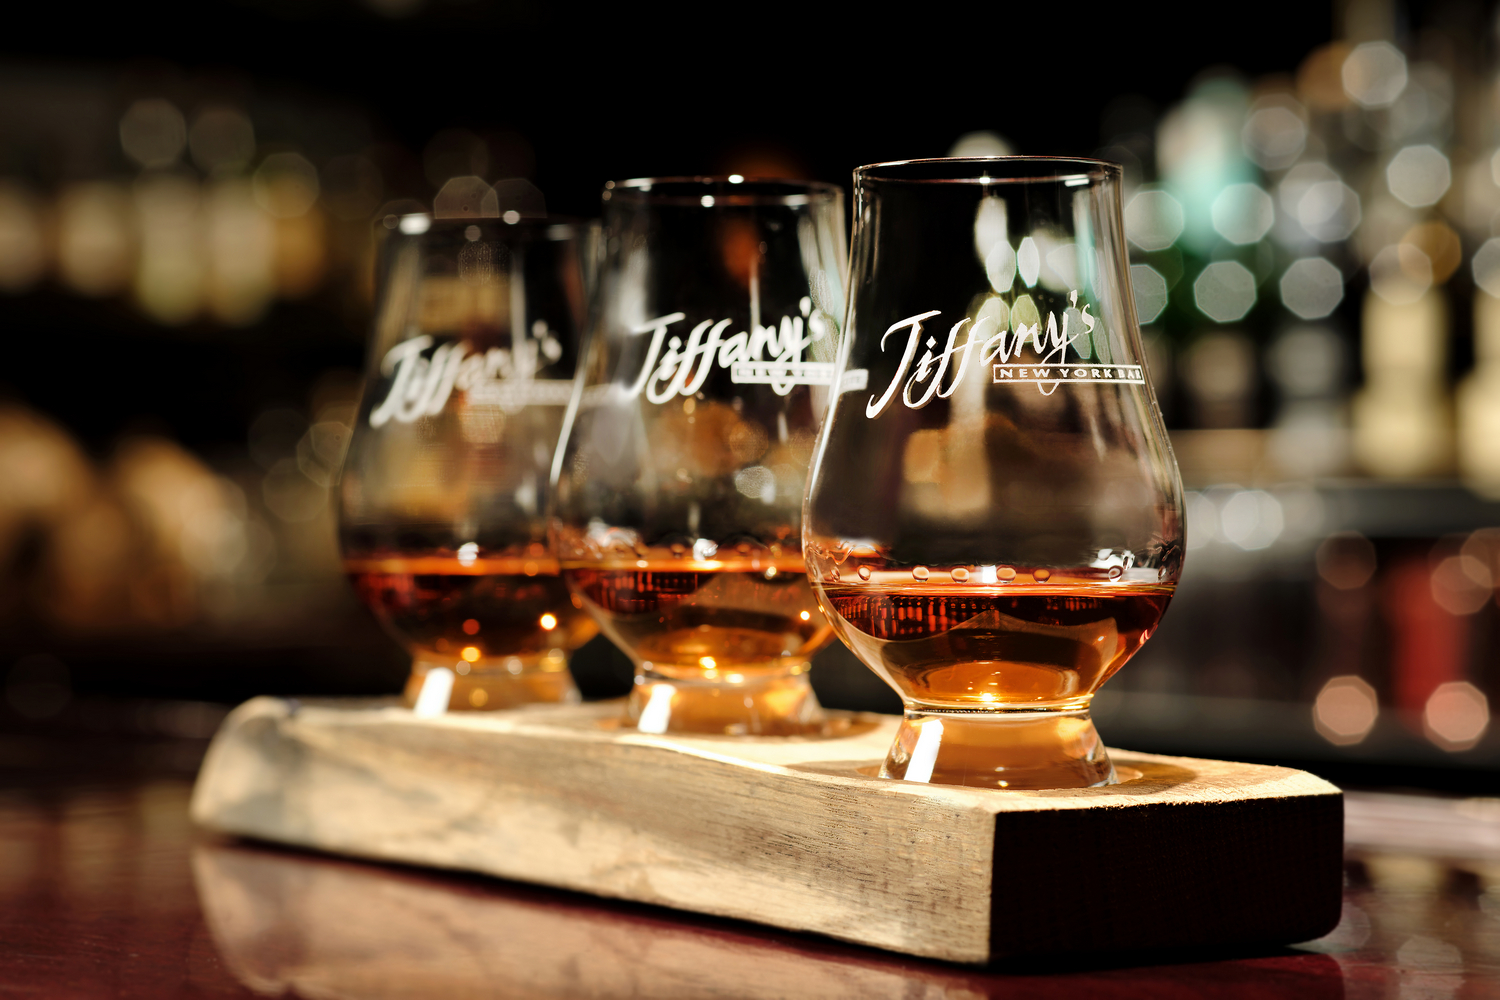 Tiffany's New York Bar - Whisky Flight Tiffany 紐約吧 - 威士忌之旅_1500x1000